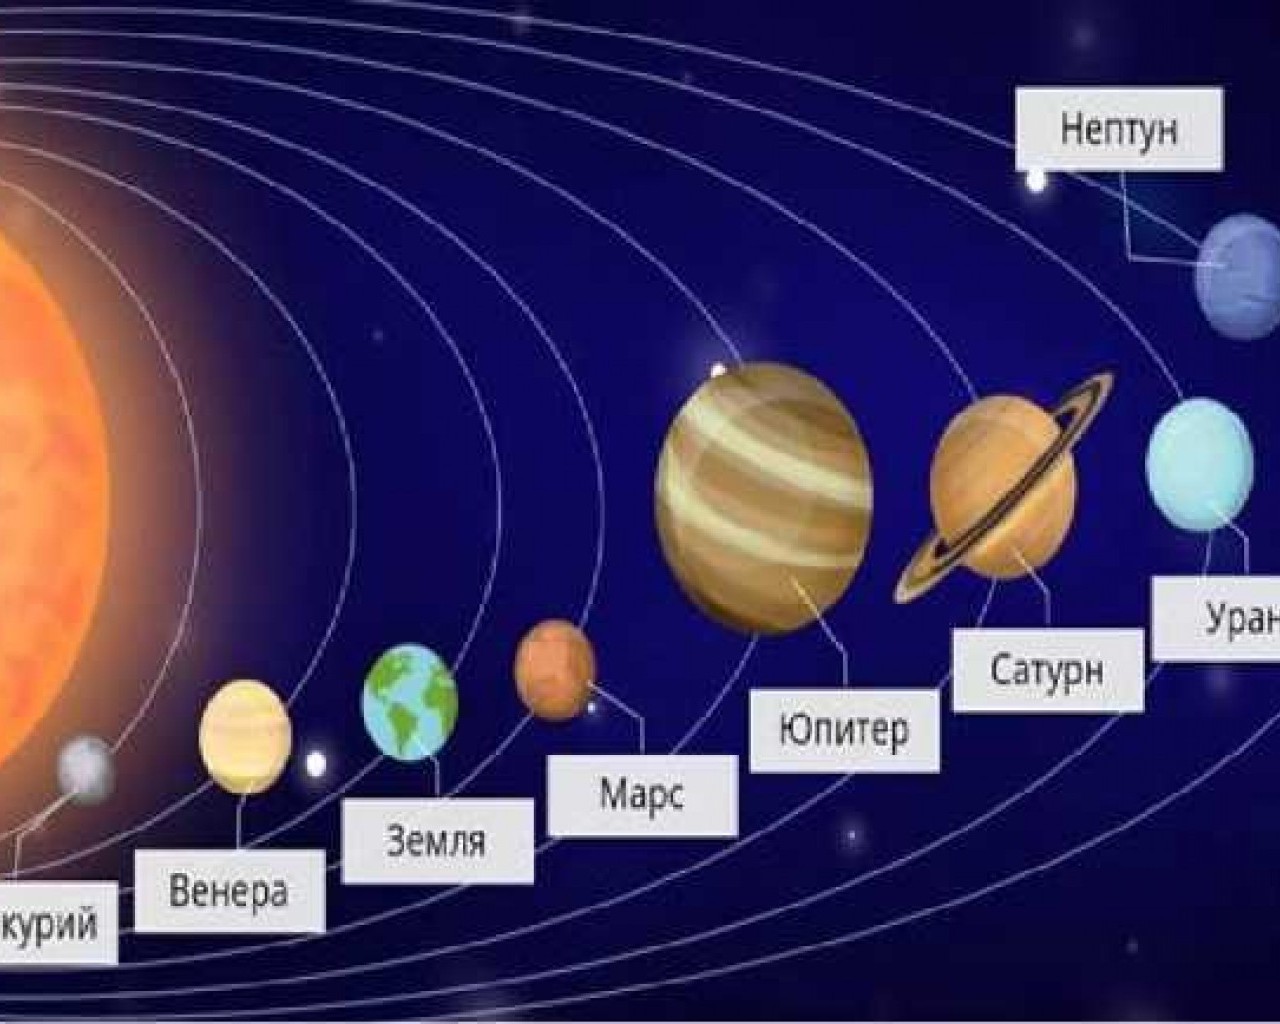 Сколько планет 8. Планеты солнечной системы по порядку удаления от солнца. Очередность планет от солнца в солнечной системе. Расположение планет солнечной системы по порядку от солнца. Порядок расположения планет в солнечной системе начиная от солнца.